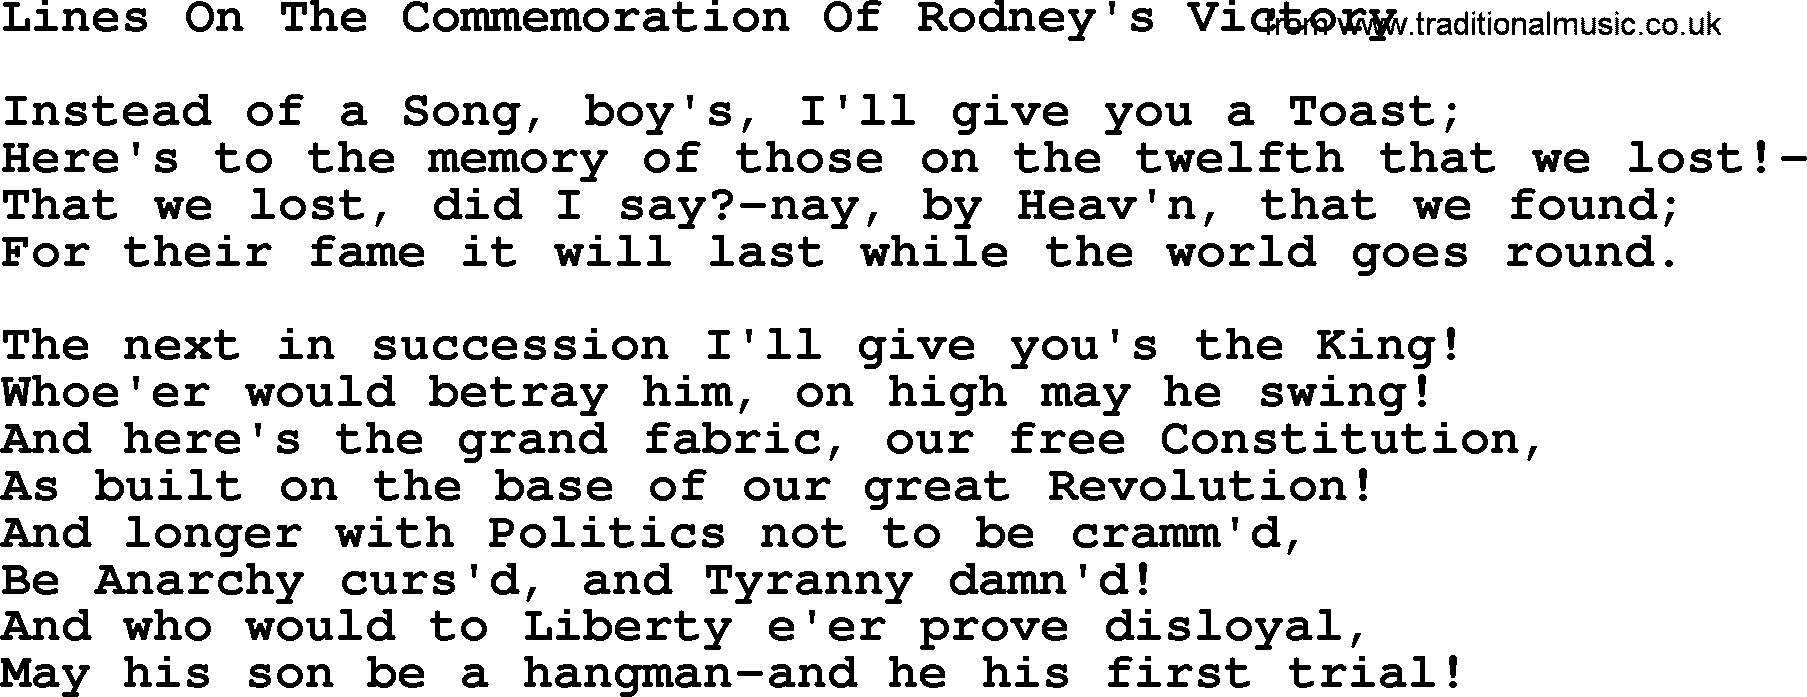 Robert Burns Songs & Lyrics: Lines On The Commemoration Of Rodney's Victory